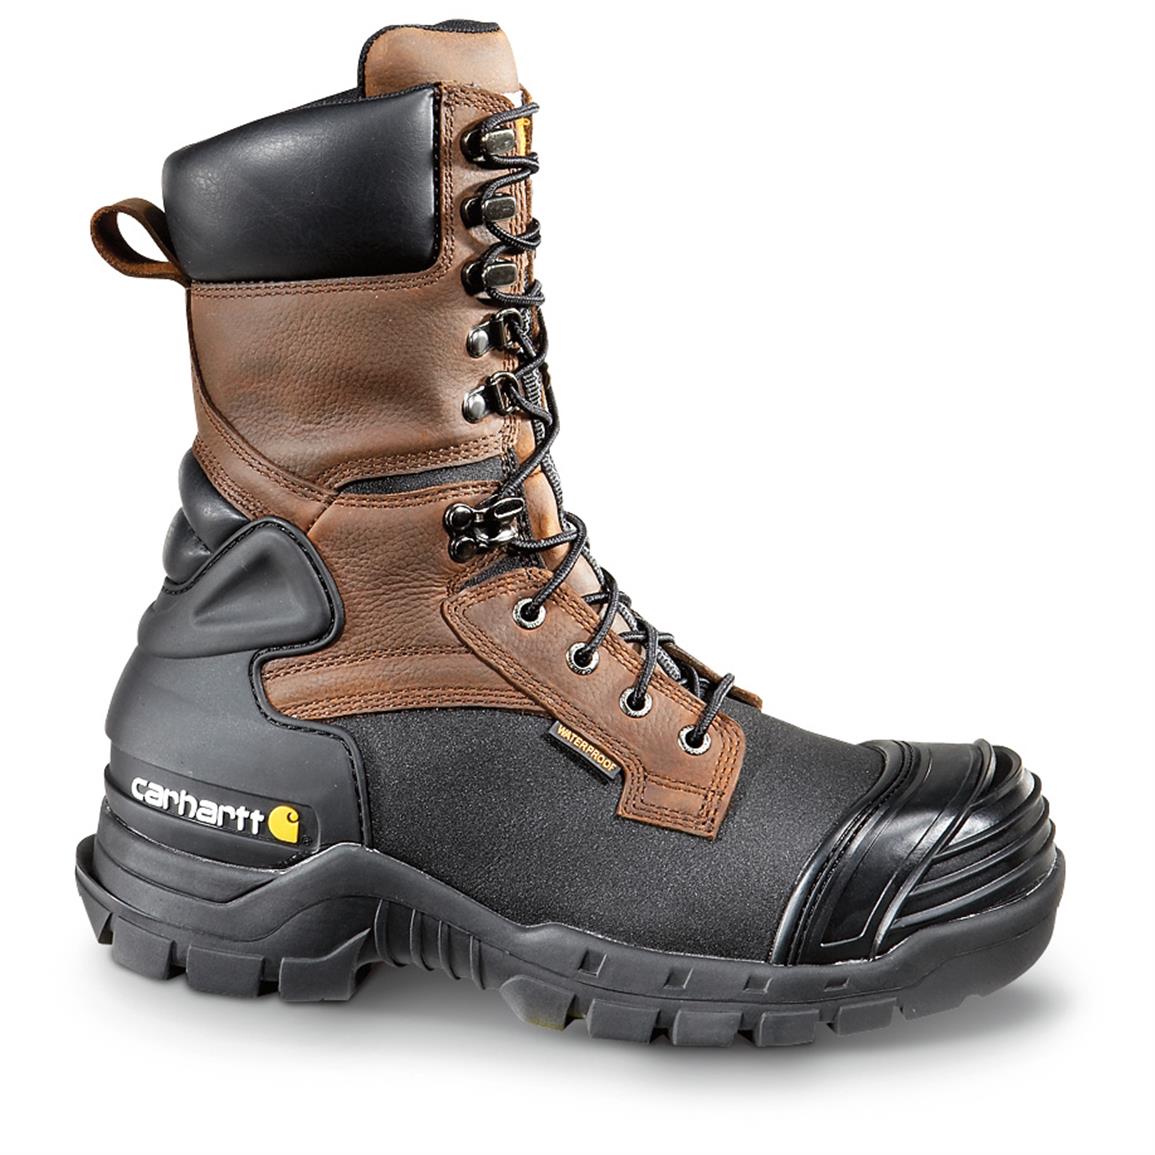 1000 gram insulated work boots